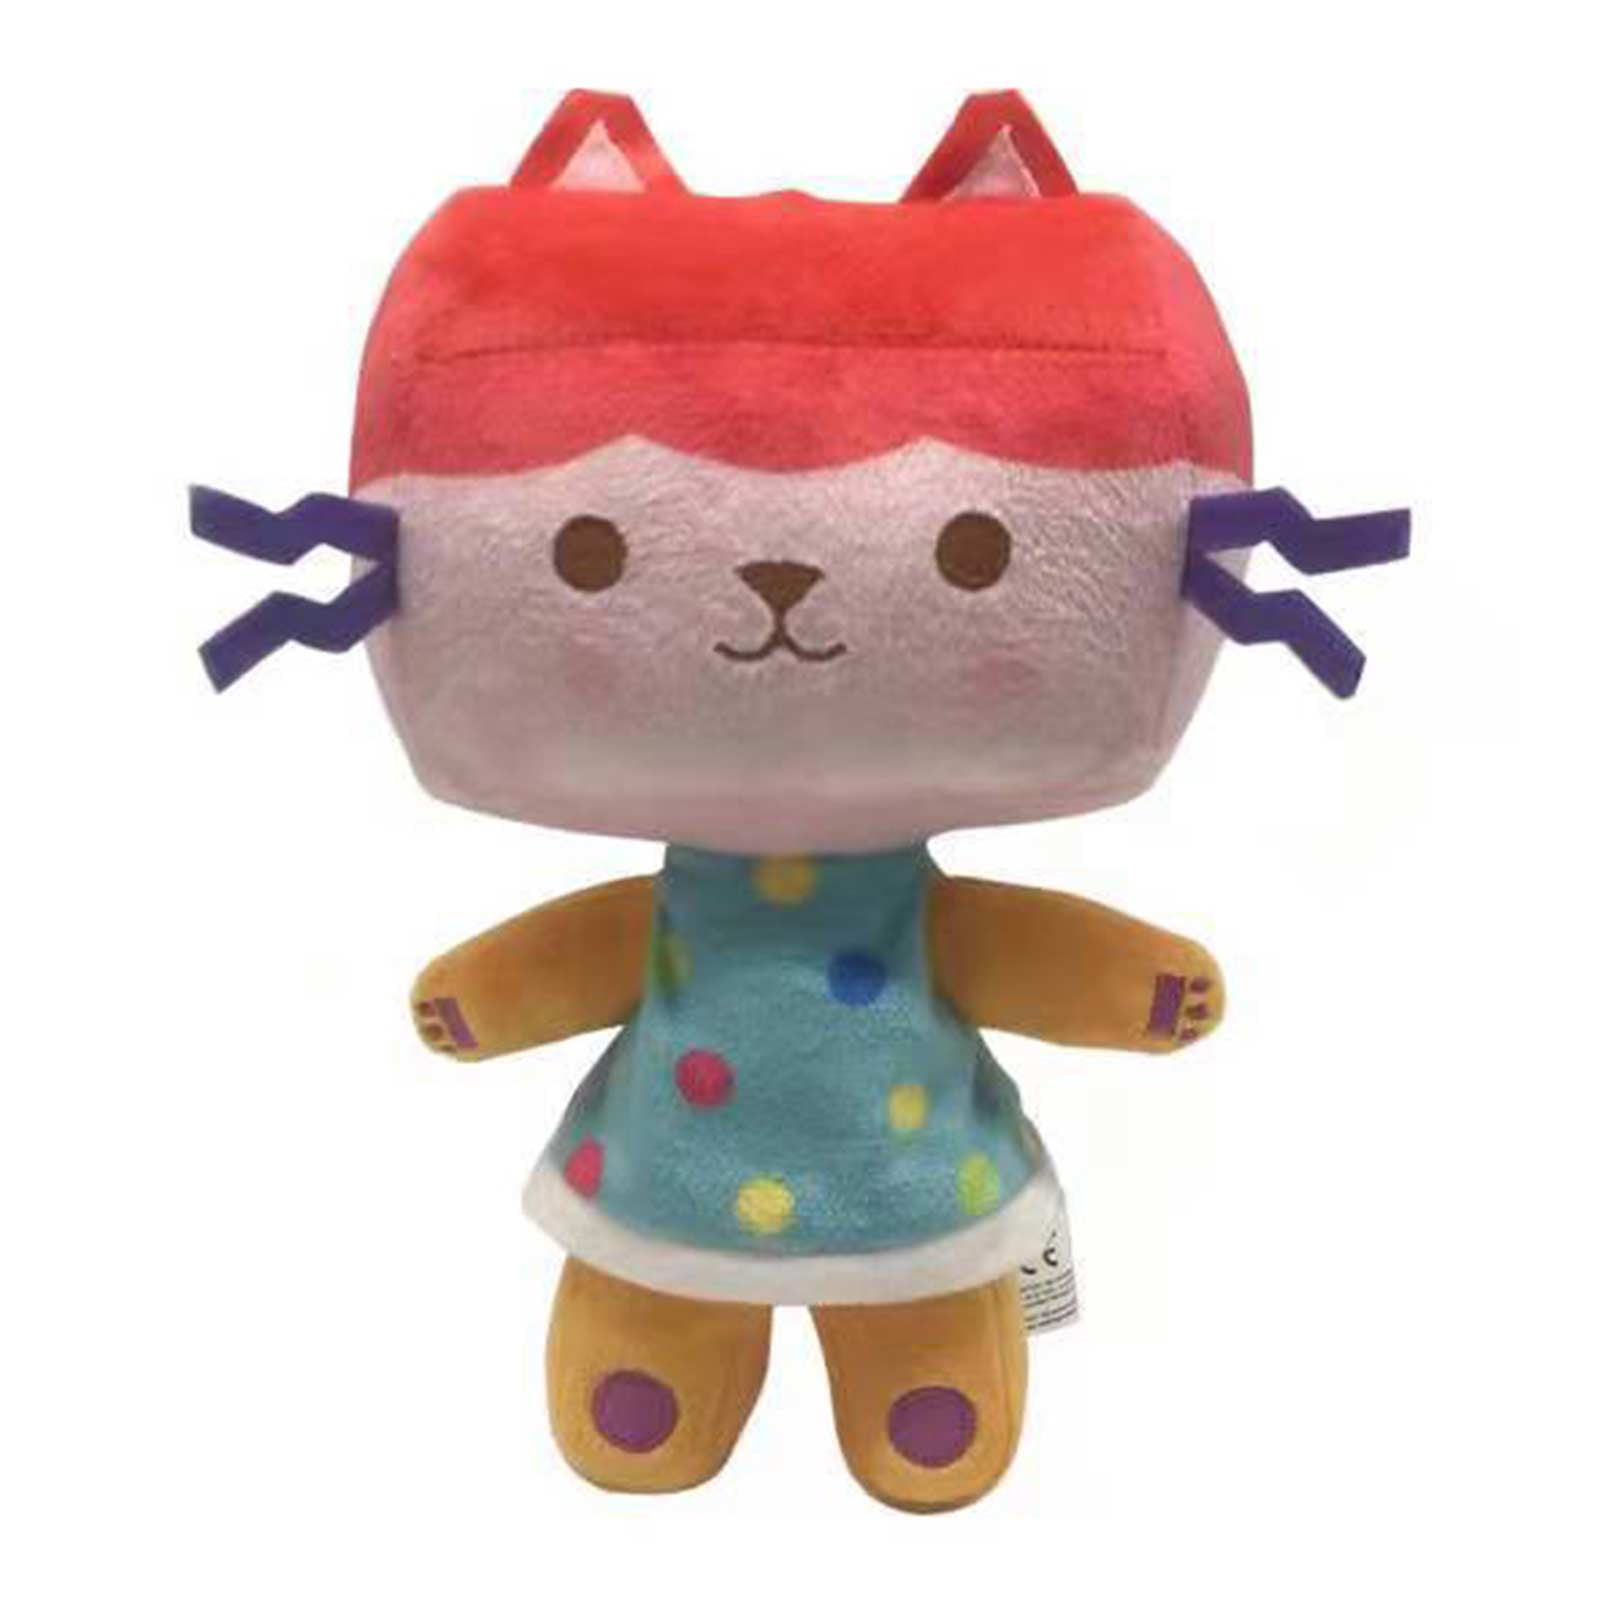 Plush Jumbo Cat Money Bank Toy Doll 9in 